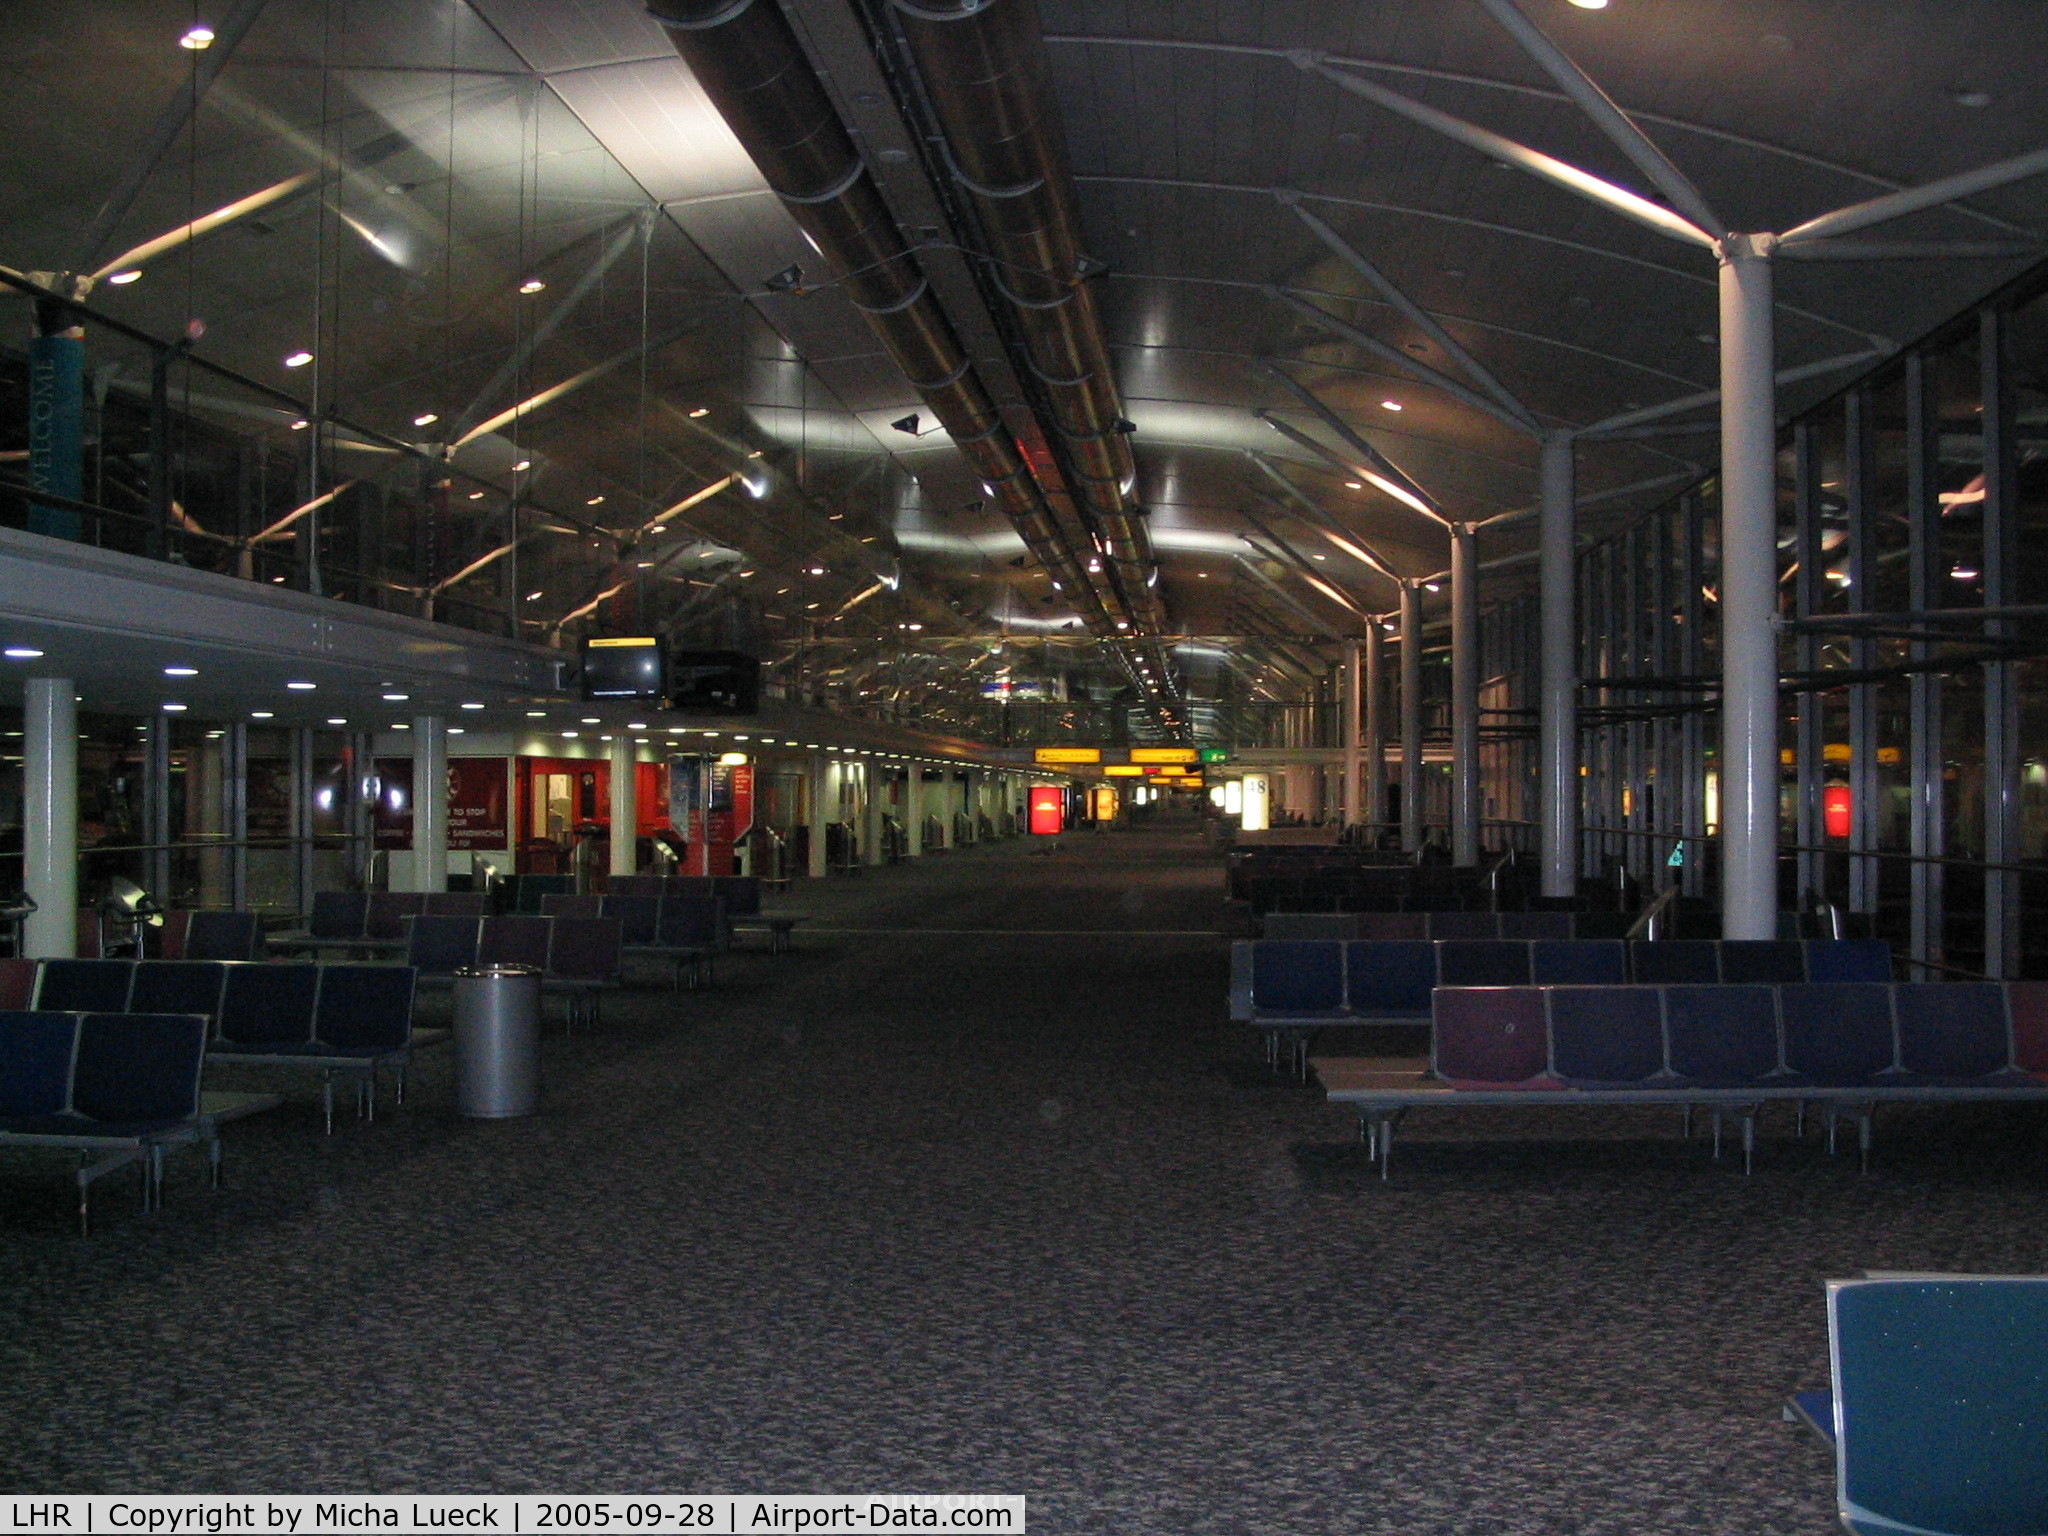 London Heathrow Airport, London, England United Kingdom (LHR) - At 6:30am, even the busy airport Heathrow is still sleeping...